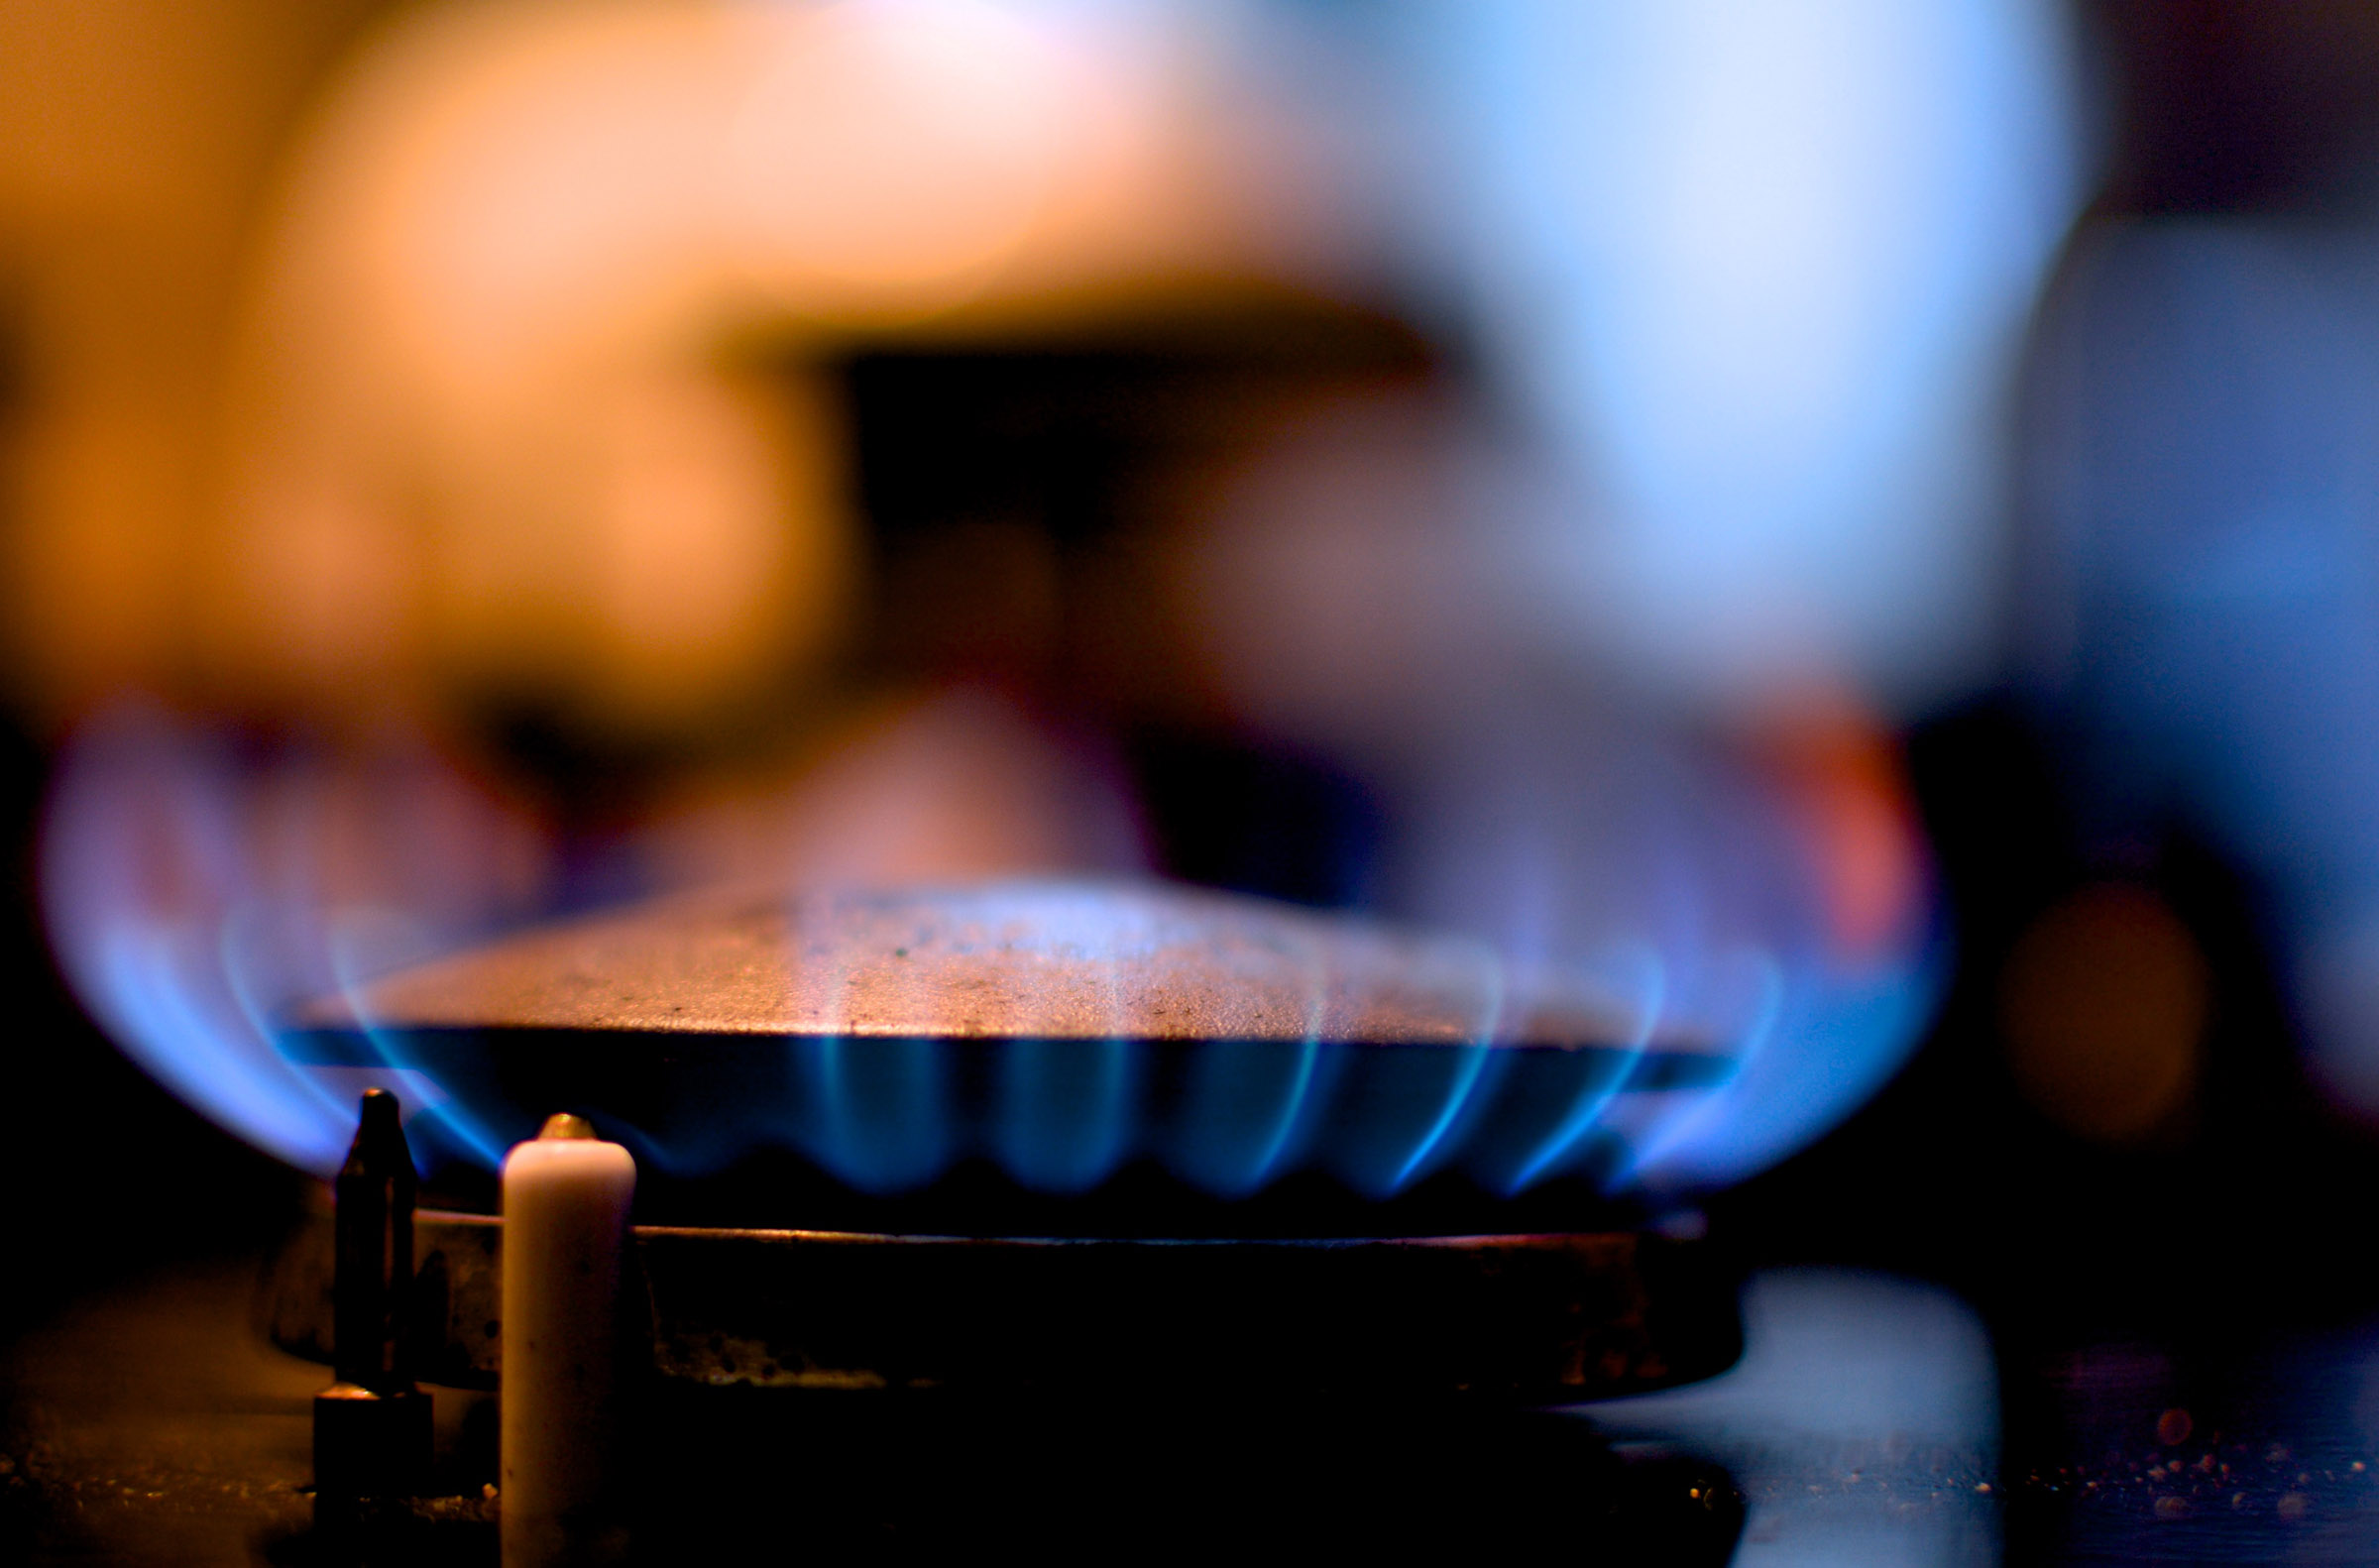 natural gas burner